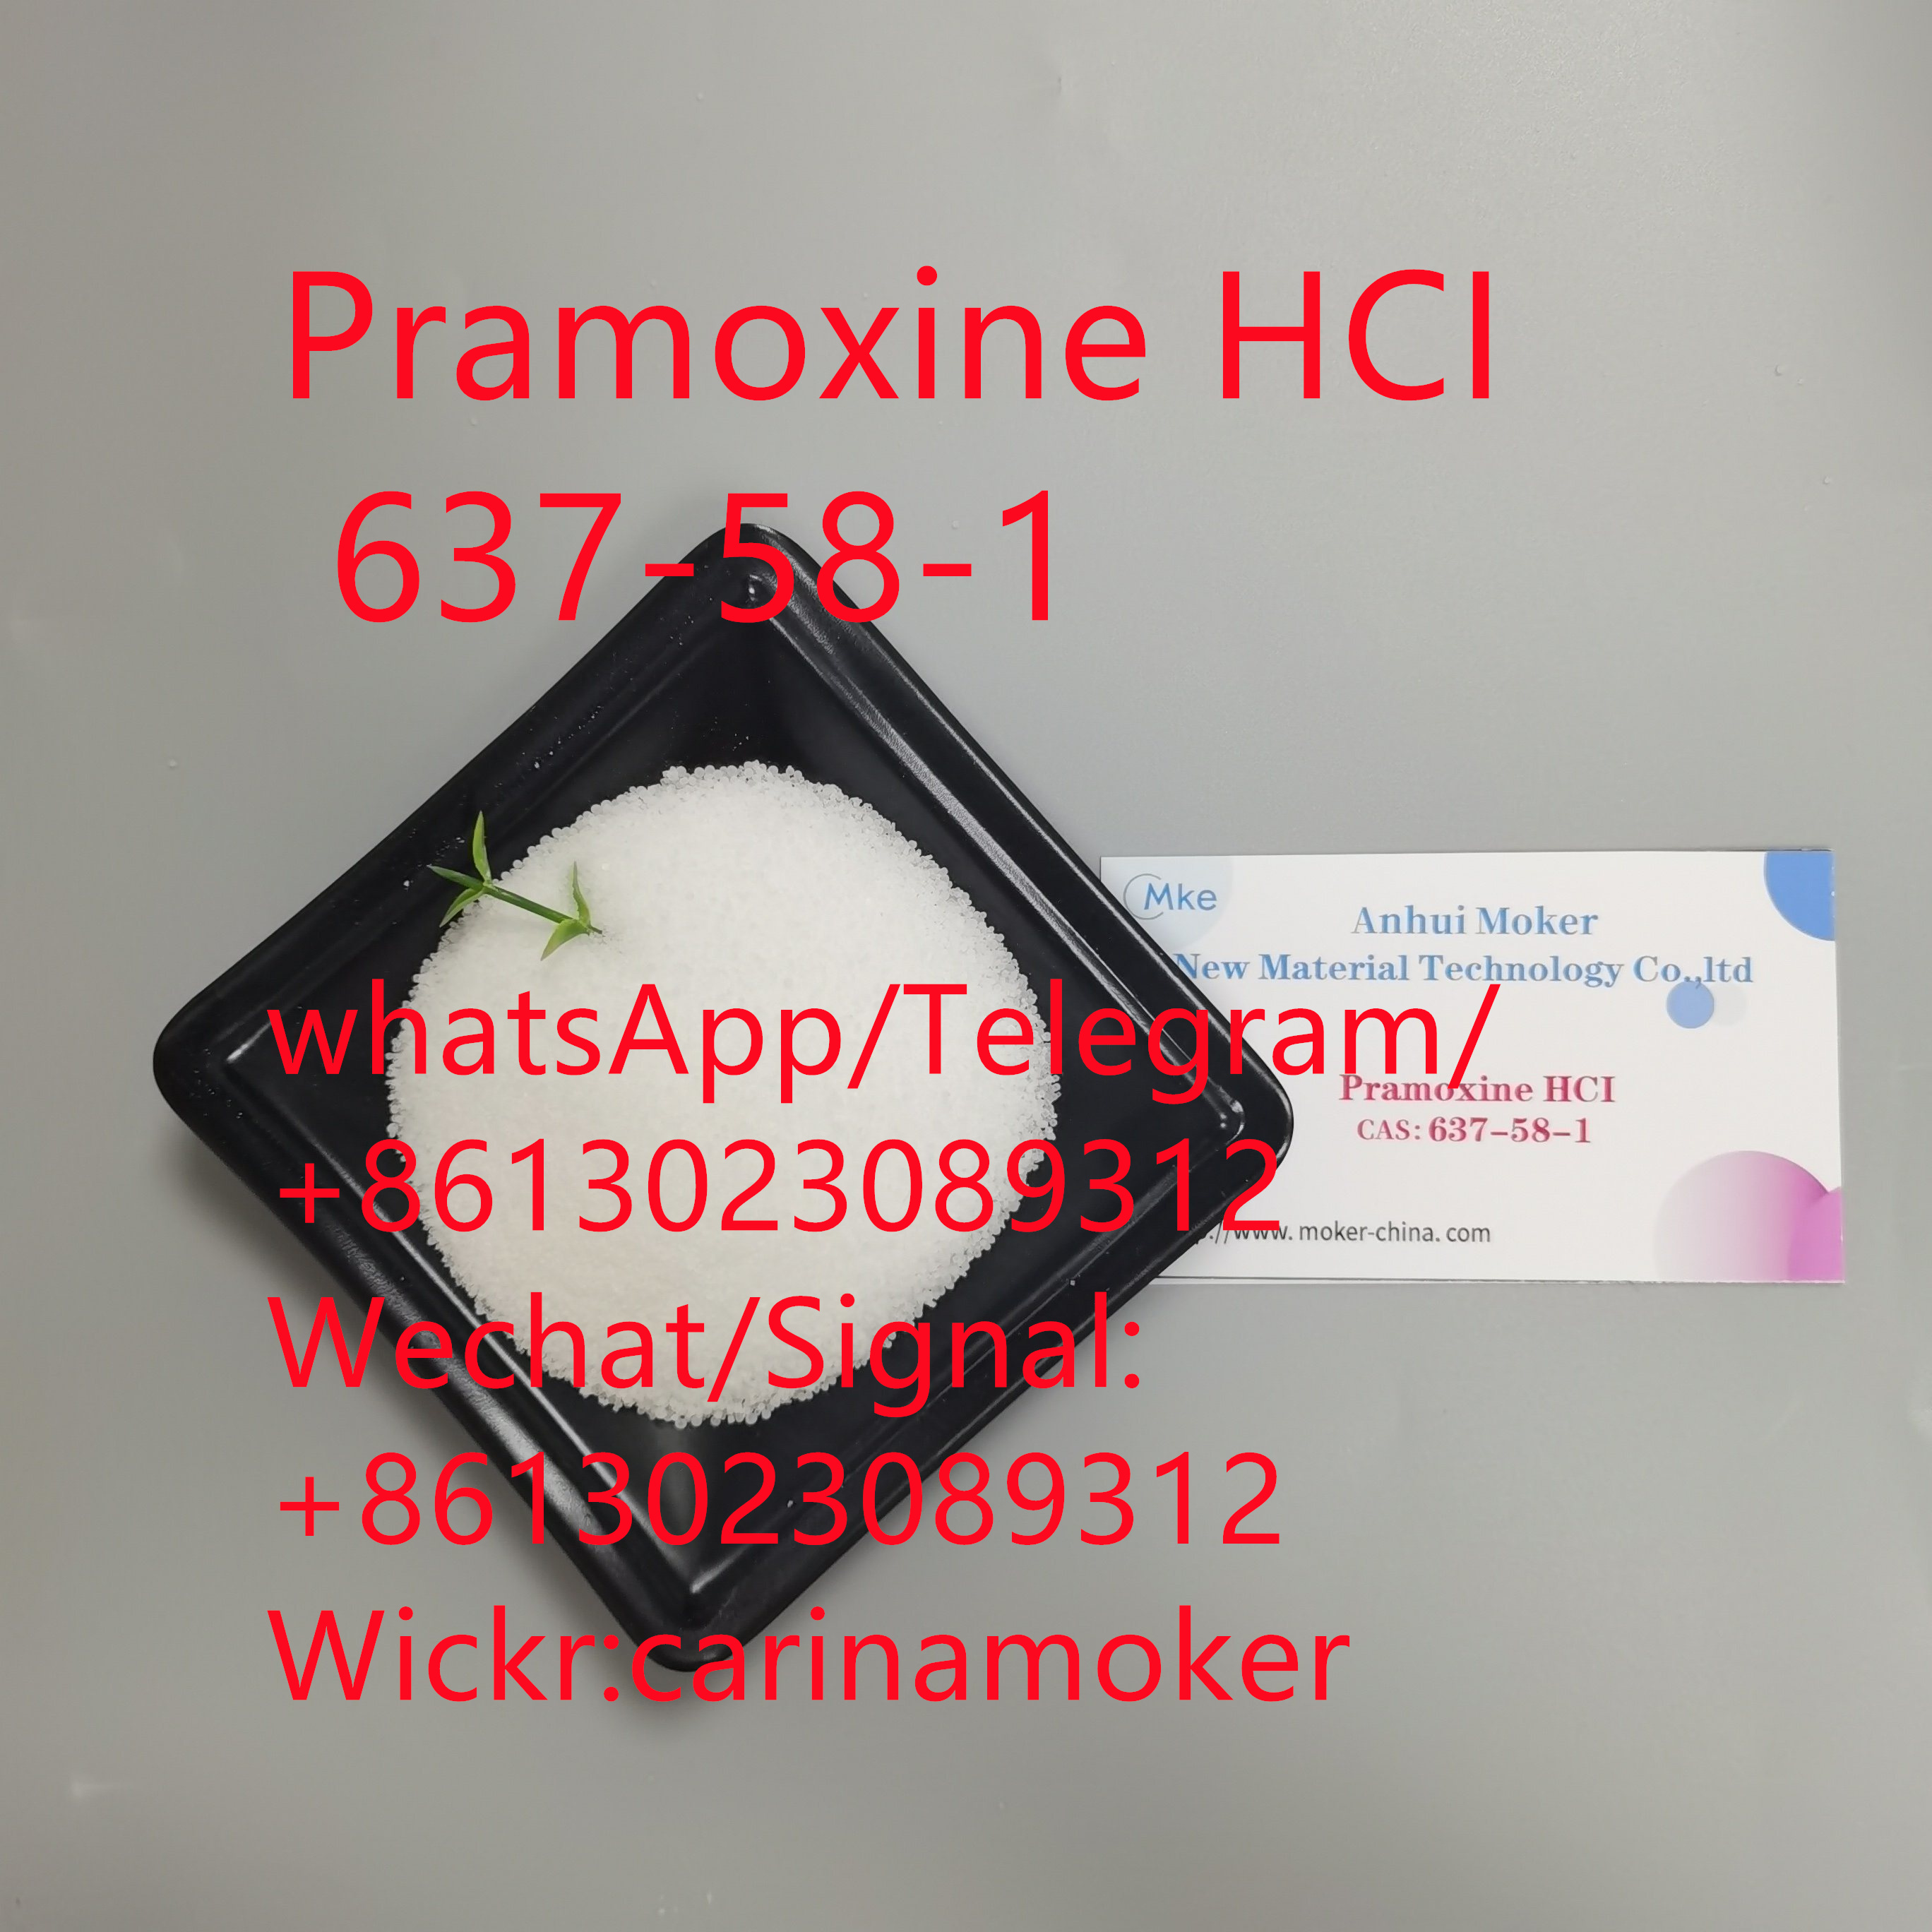 Hochwertiges Pramoxin HCI 637-58-1